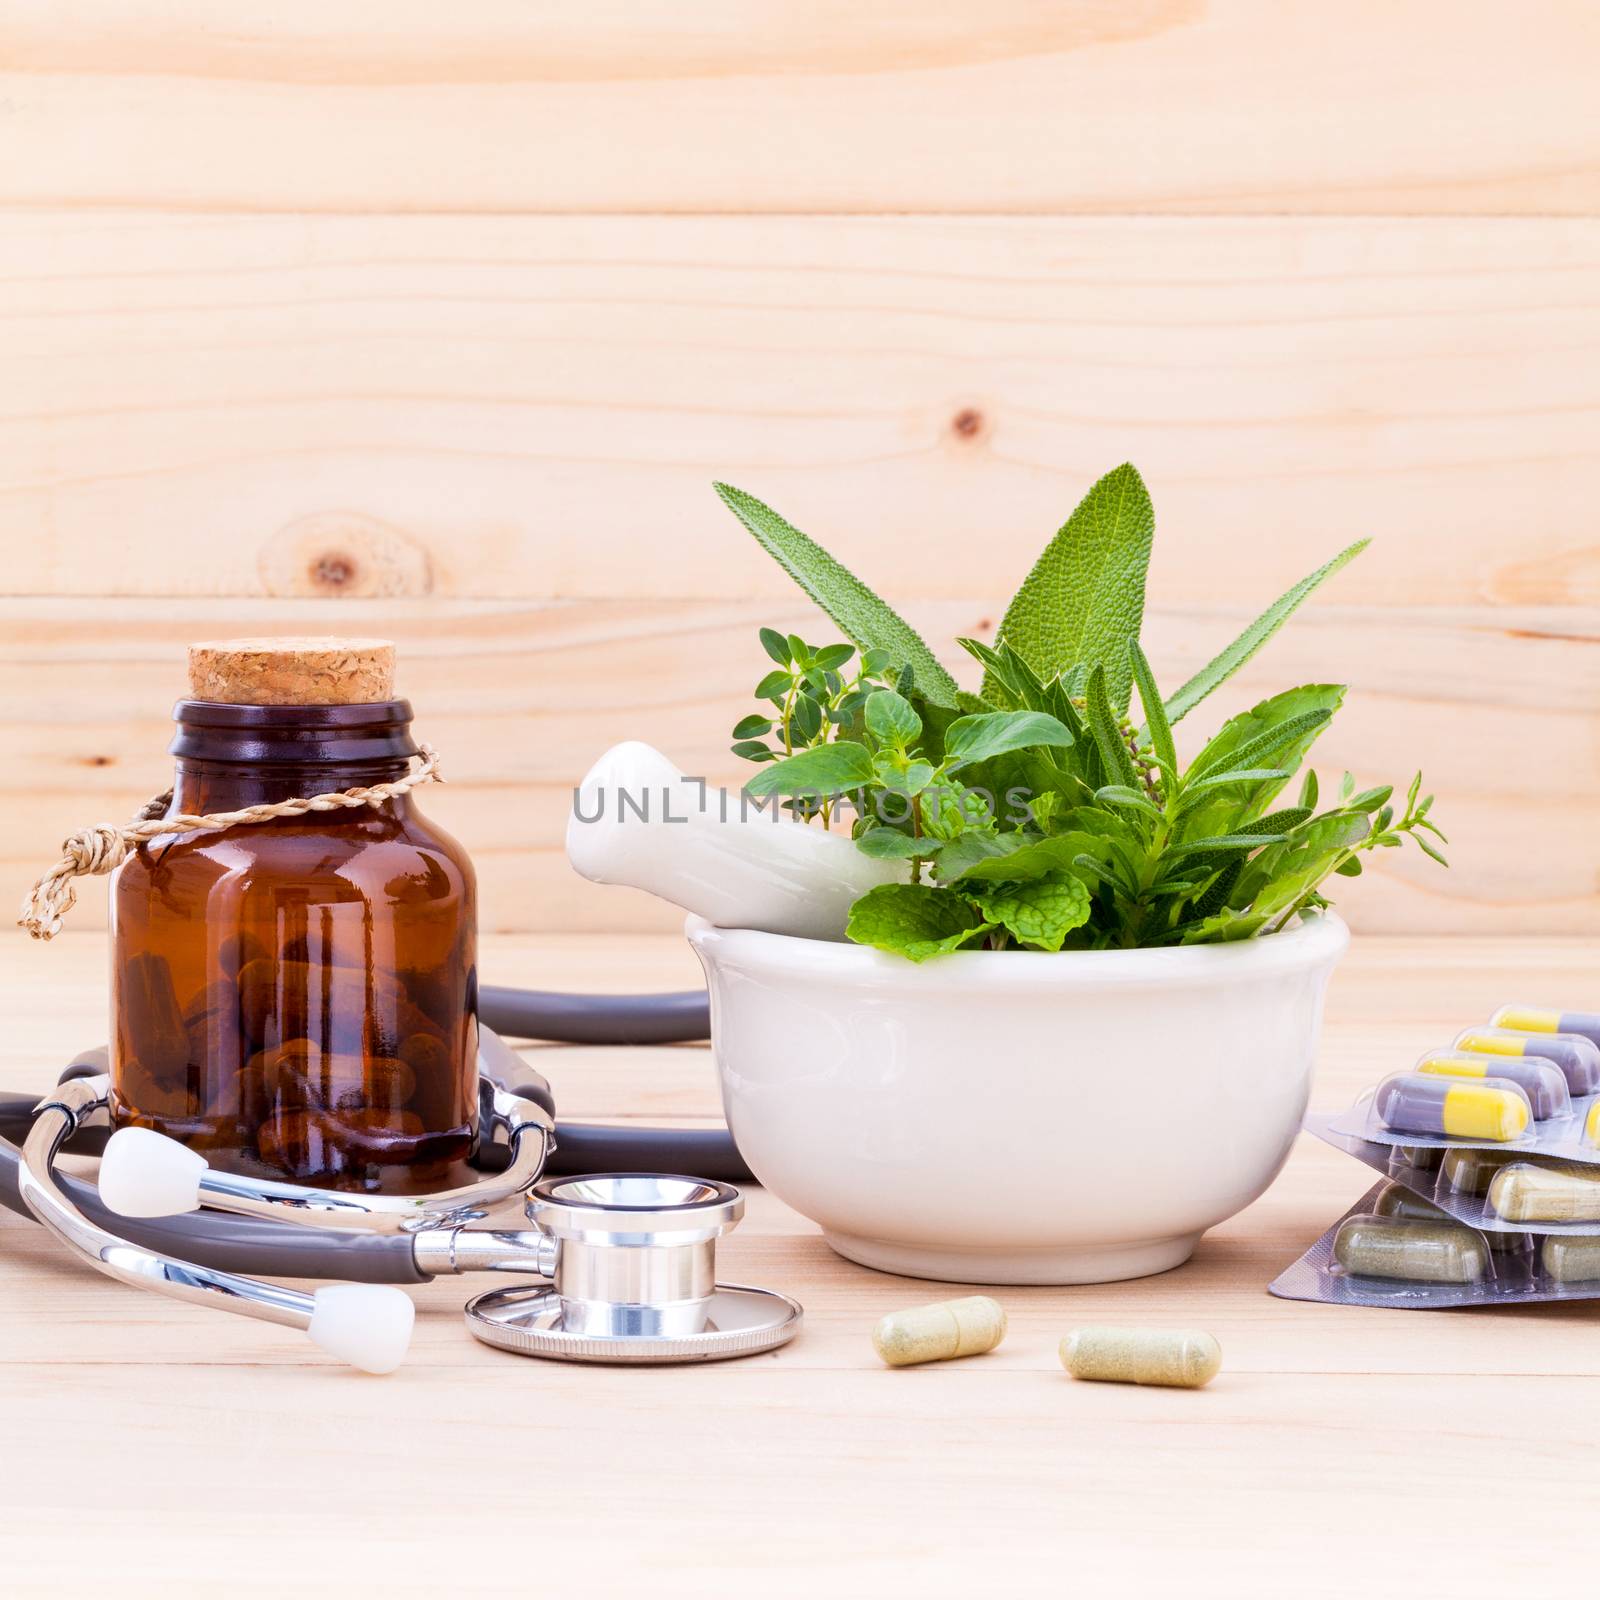 Capsule of herbal medicine alternative healthy care with stethos by kerdkanno